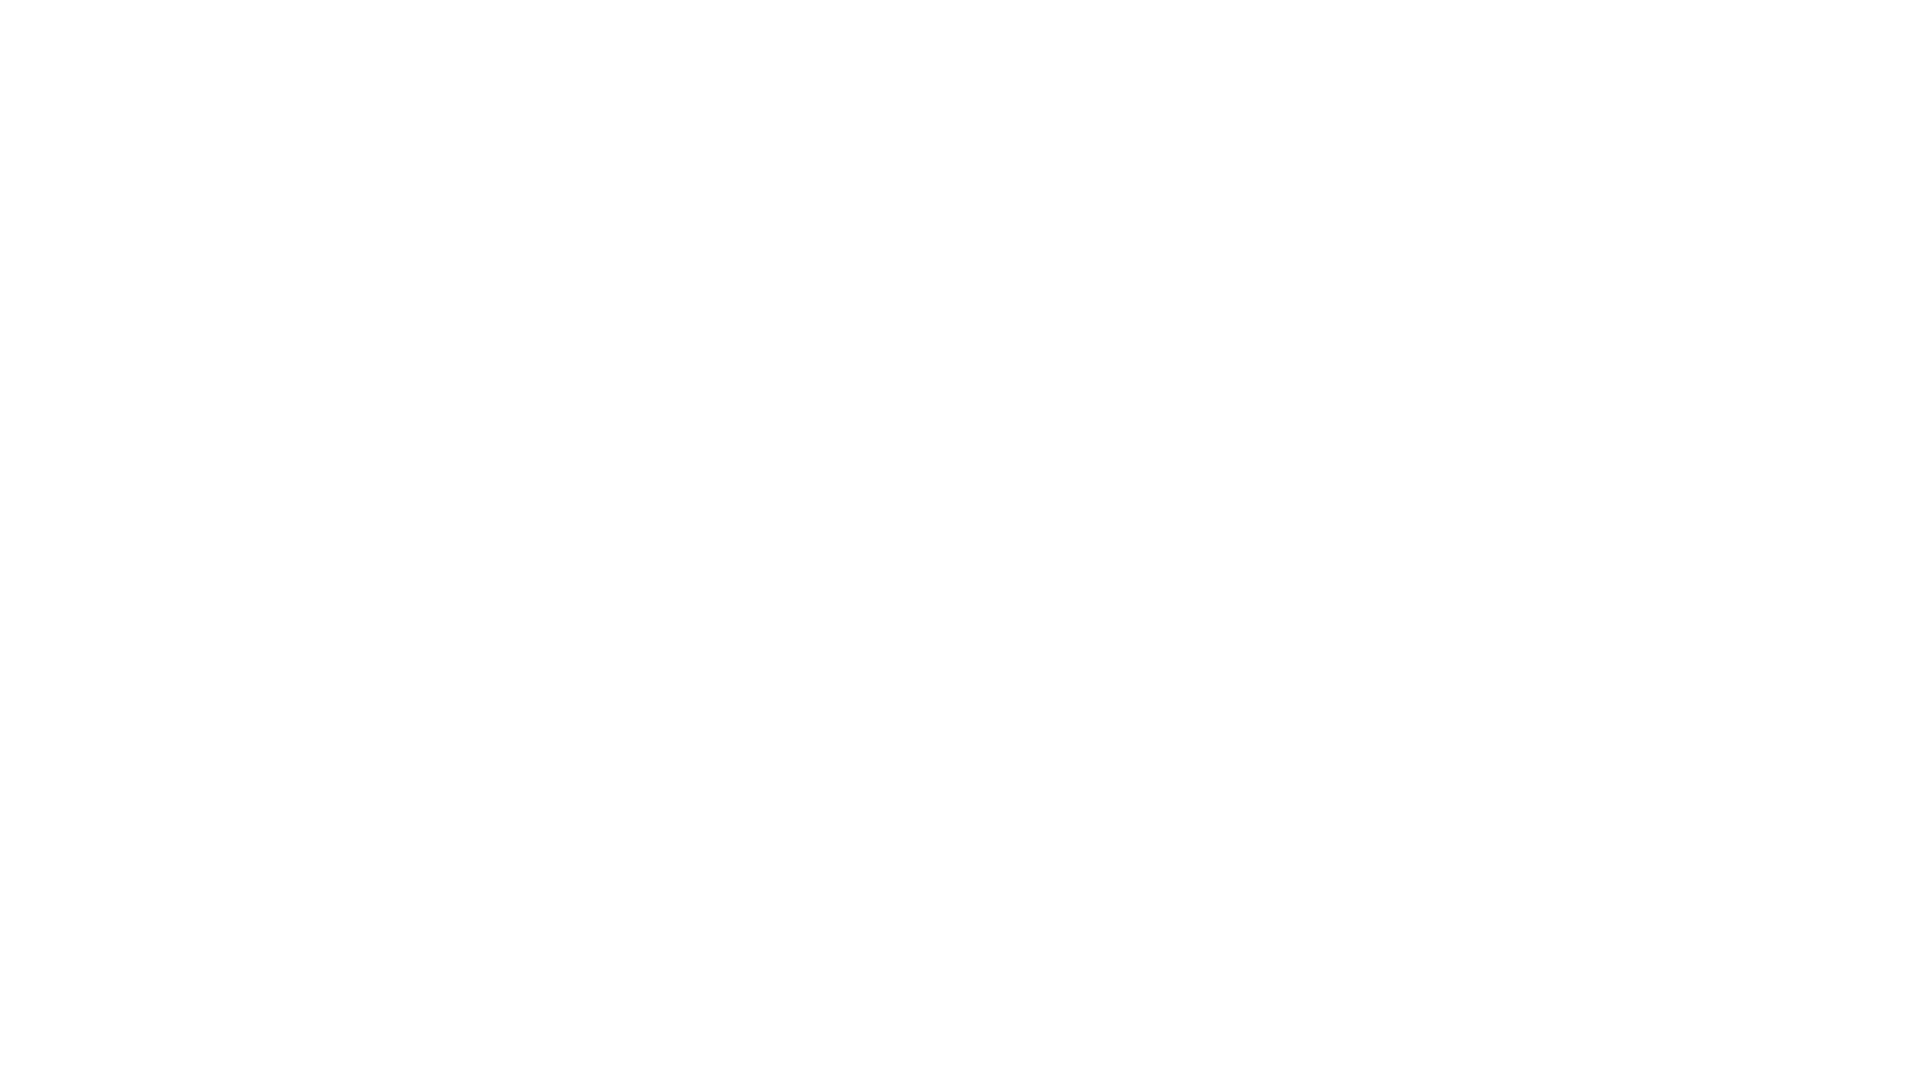 Bowflex®